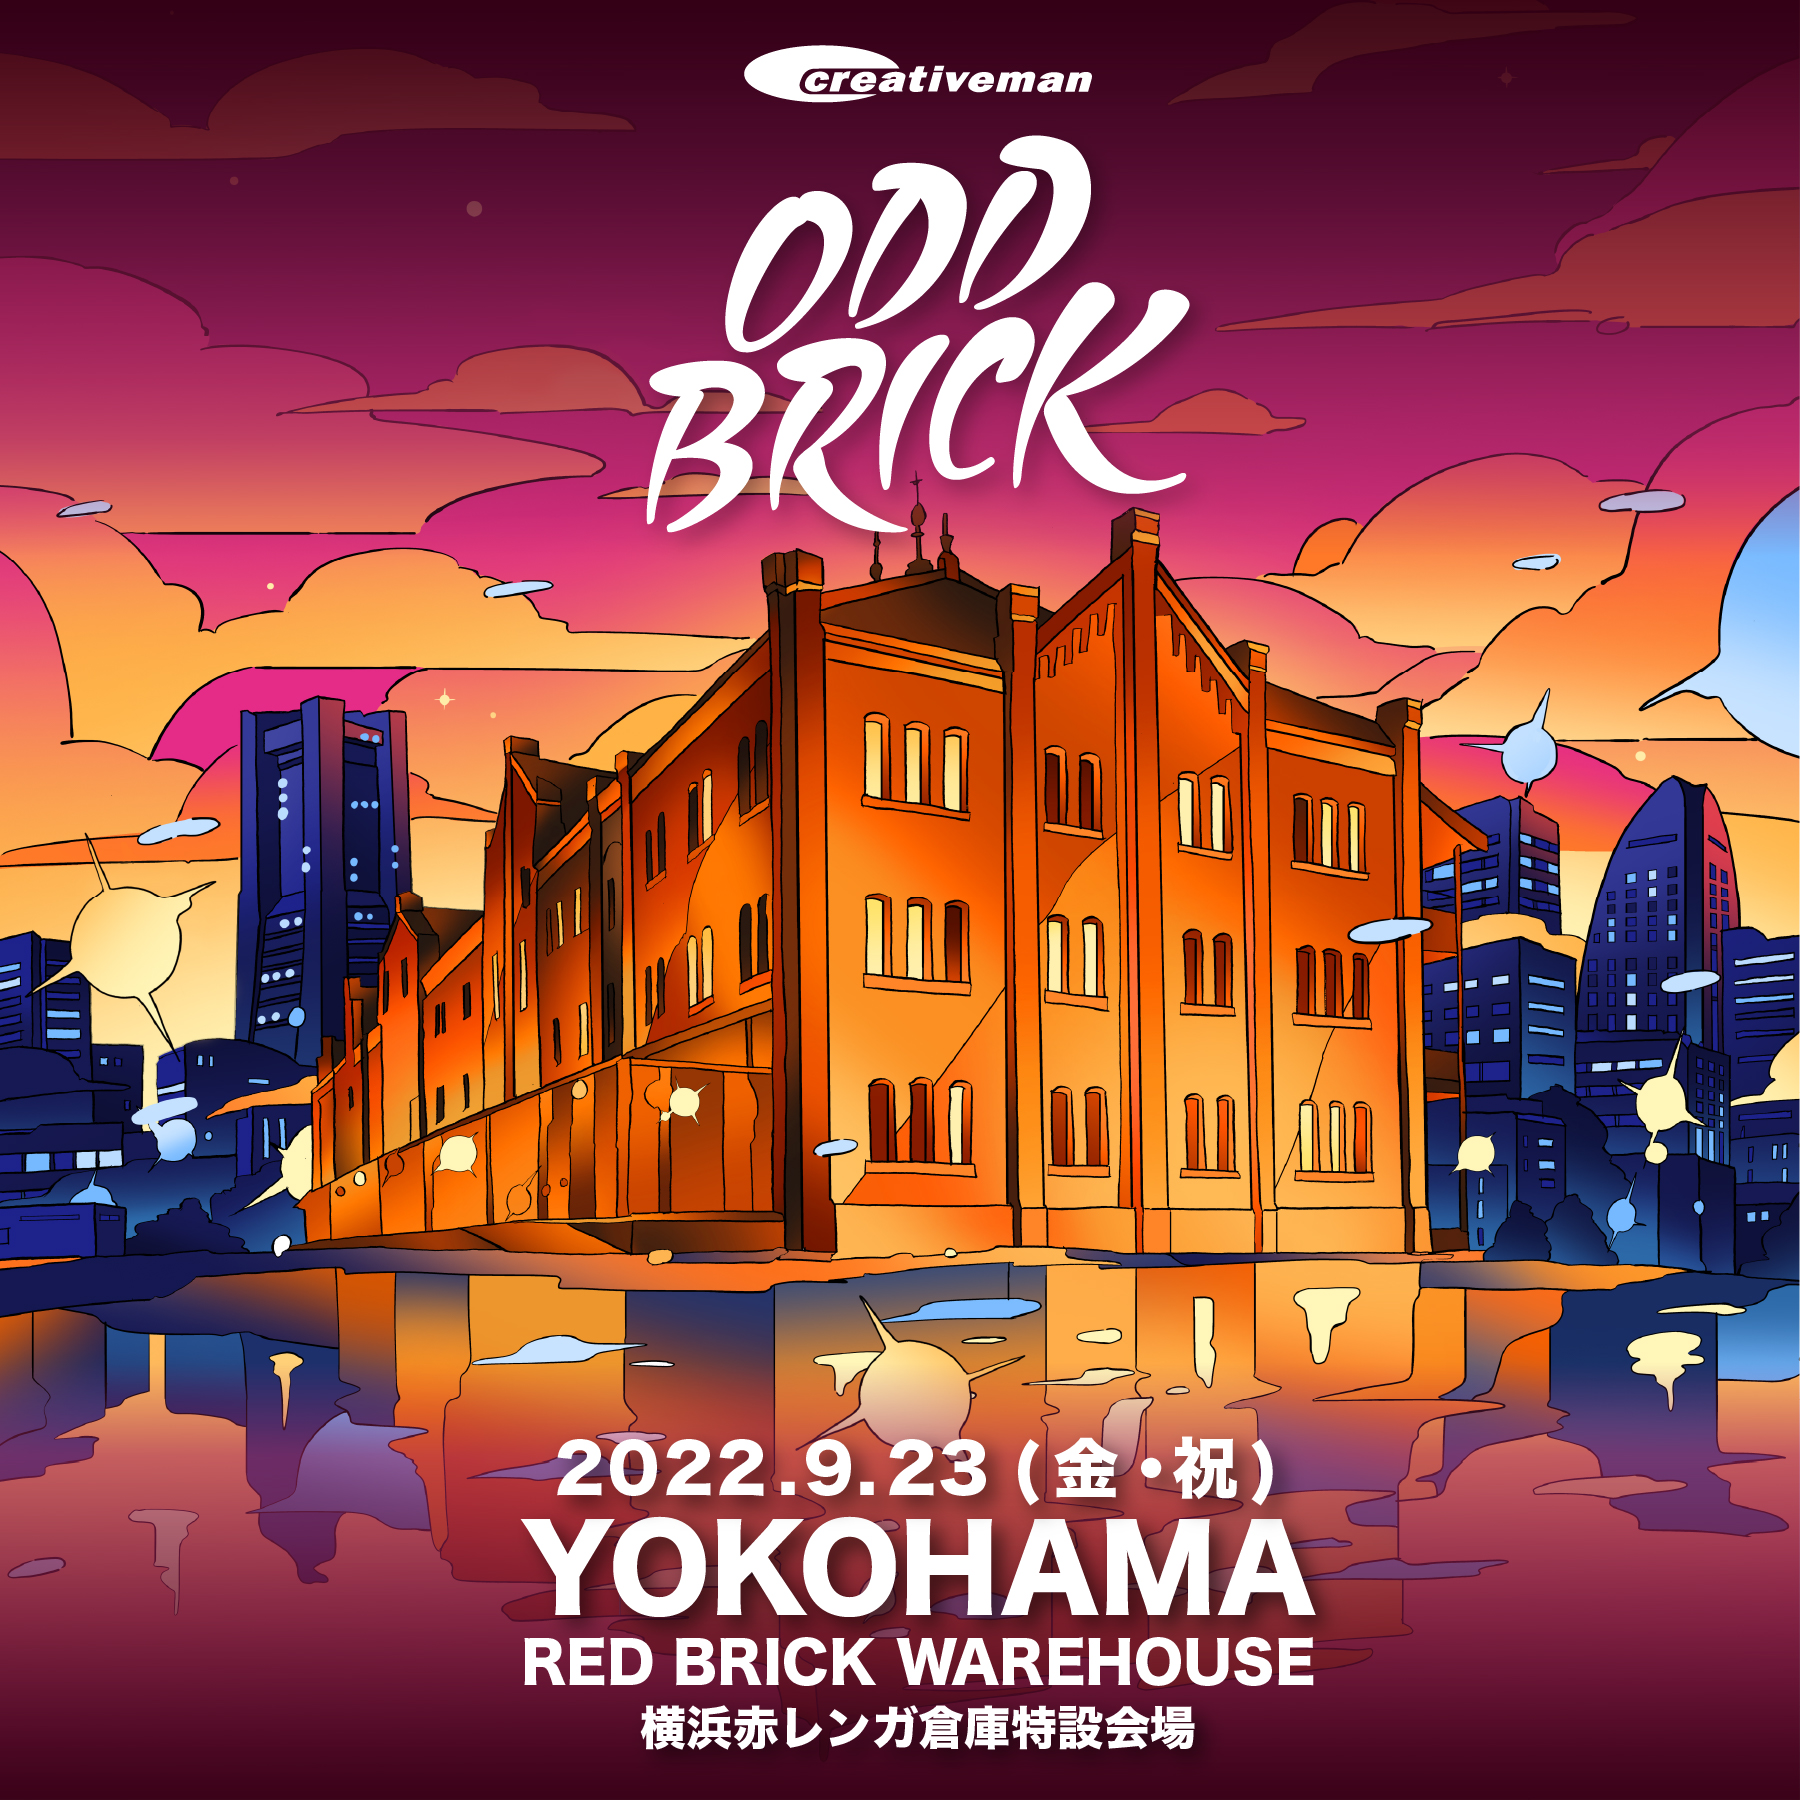 ODD BRICK FESTIVAL 2022が、9/23(金・祝)横浜赤レンガ倉庫特設会場にて開催決定！